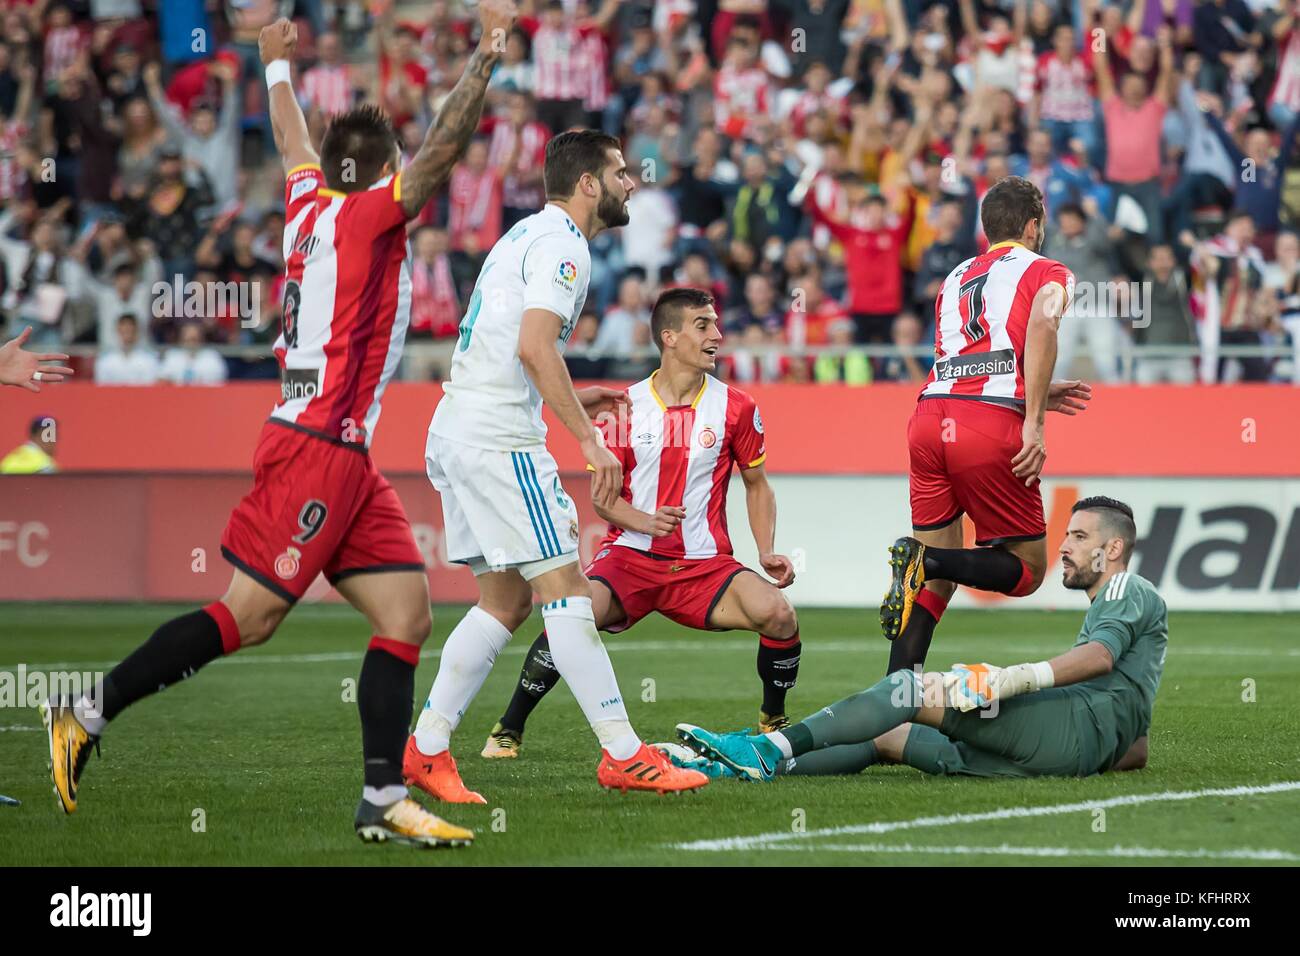 Nacho and Kiko Casilla during the La Liga soccer match between Girona ...